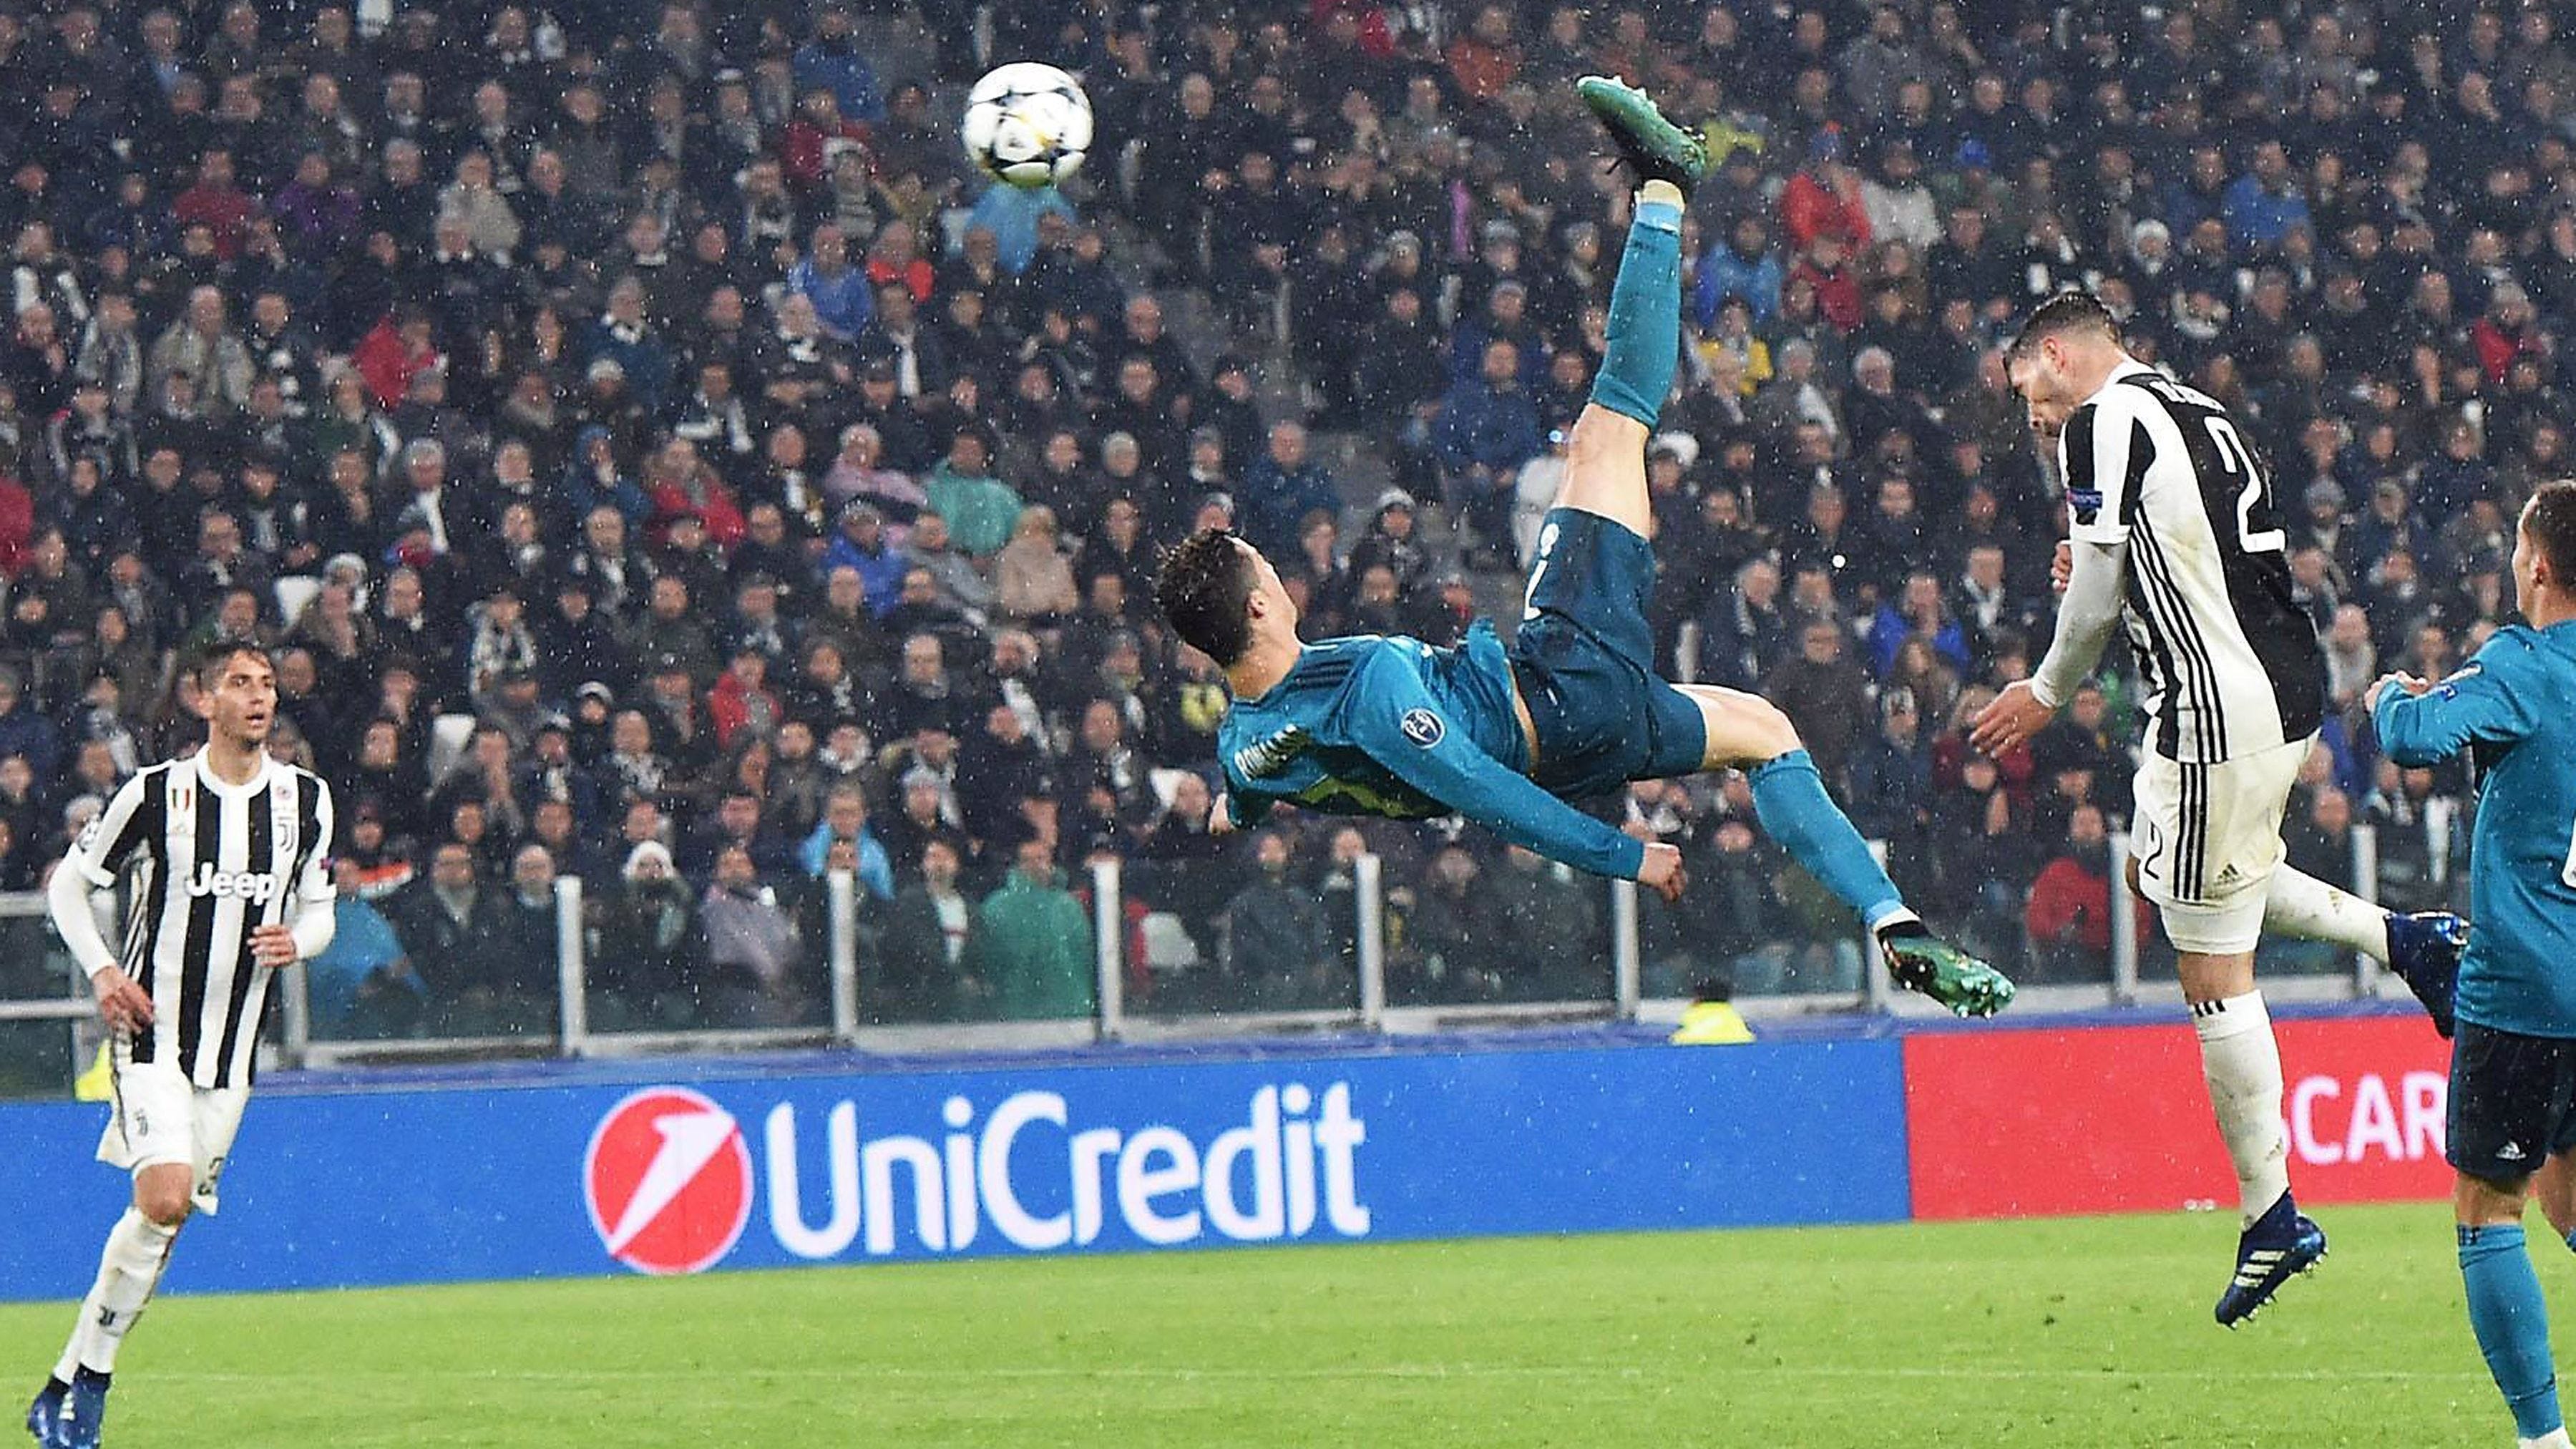 Photo Of Cristiano Ronaldo's Bicycle Kick Goal